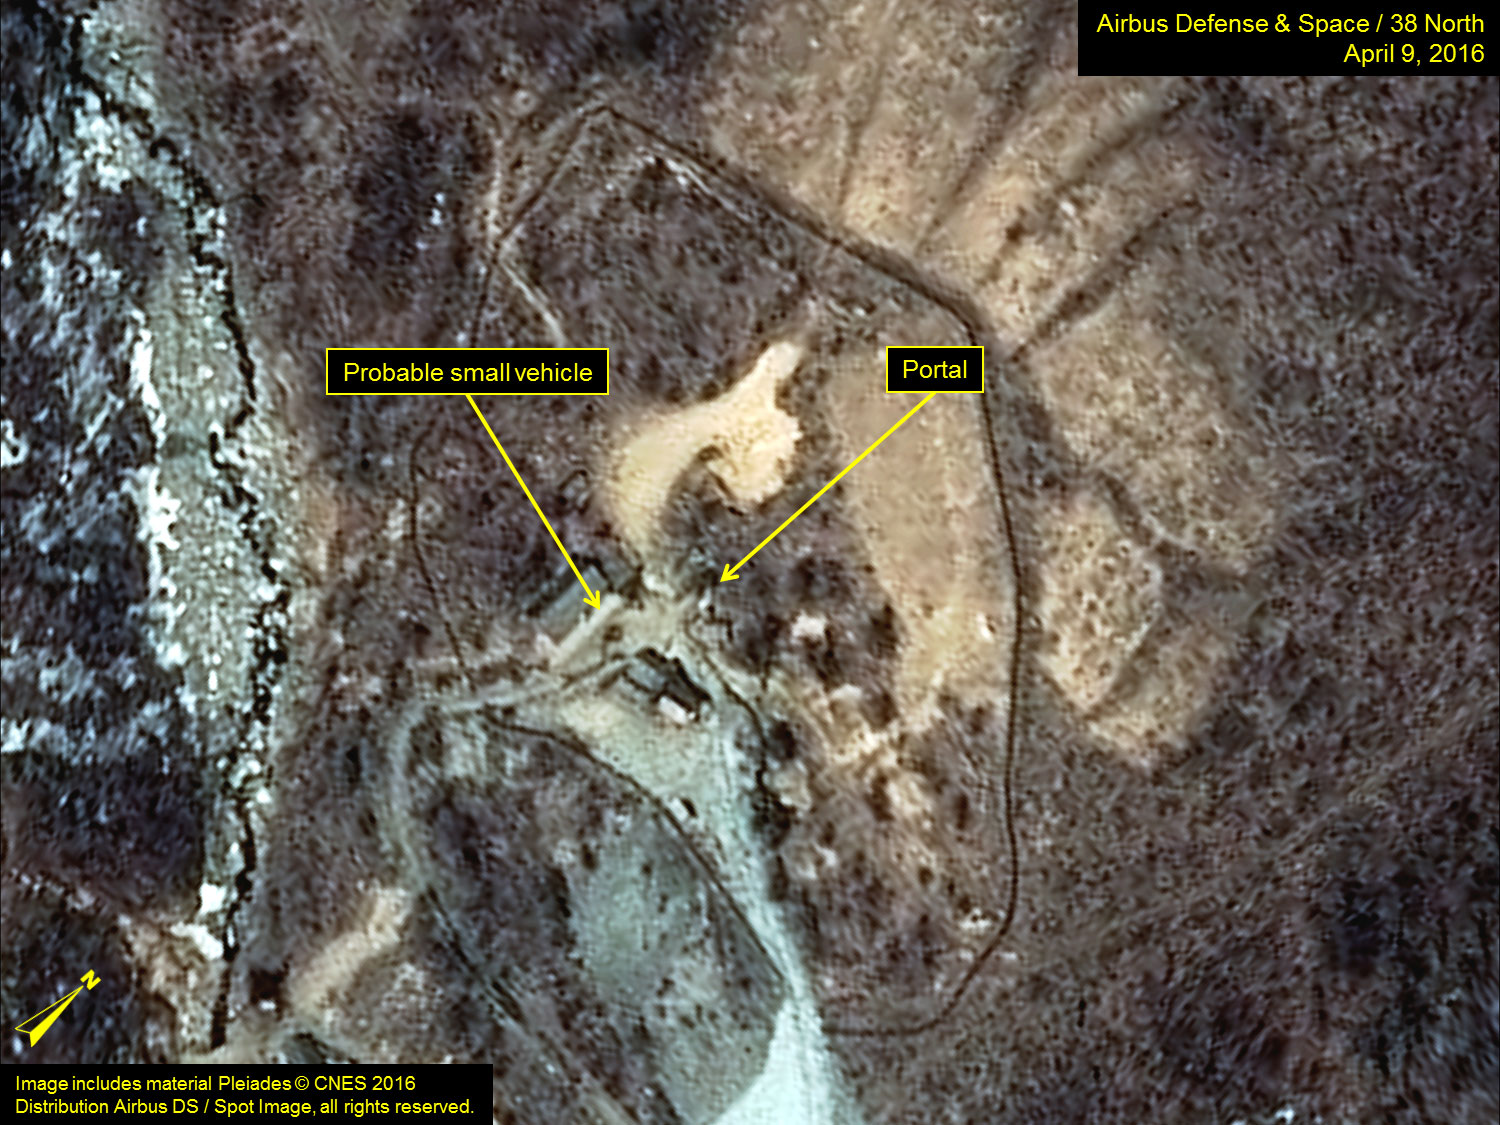 A Fifth Nuclear Test at Punggye-ri?